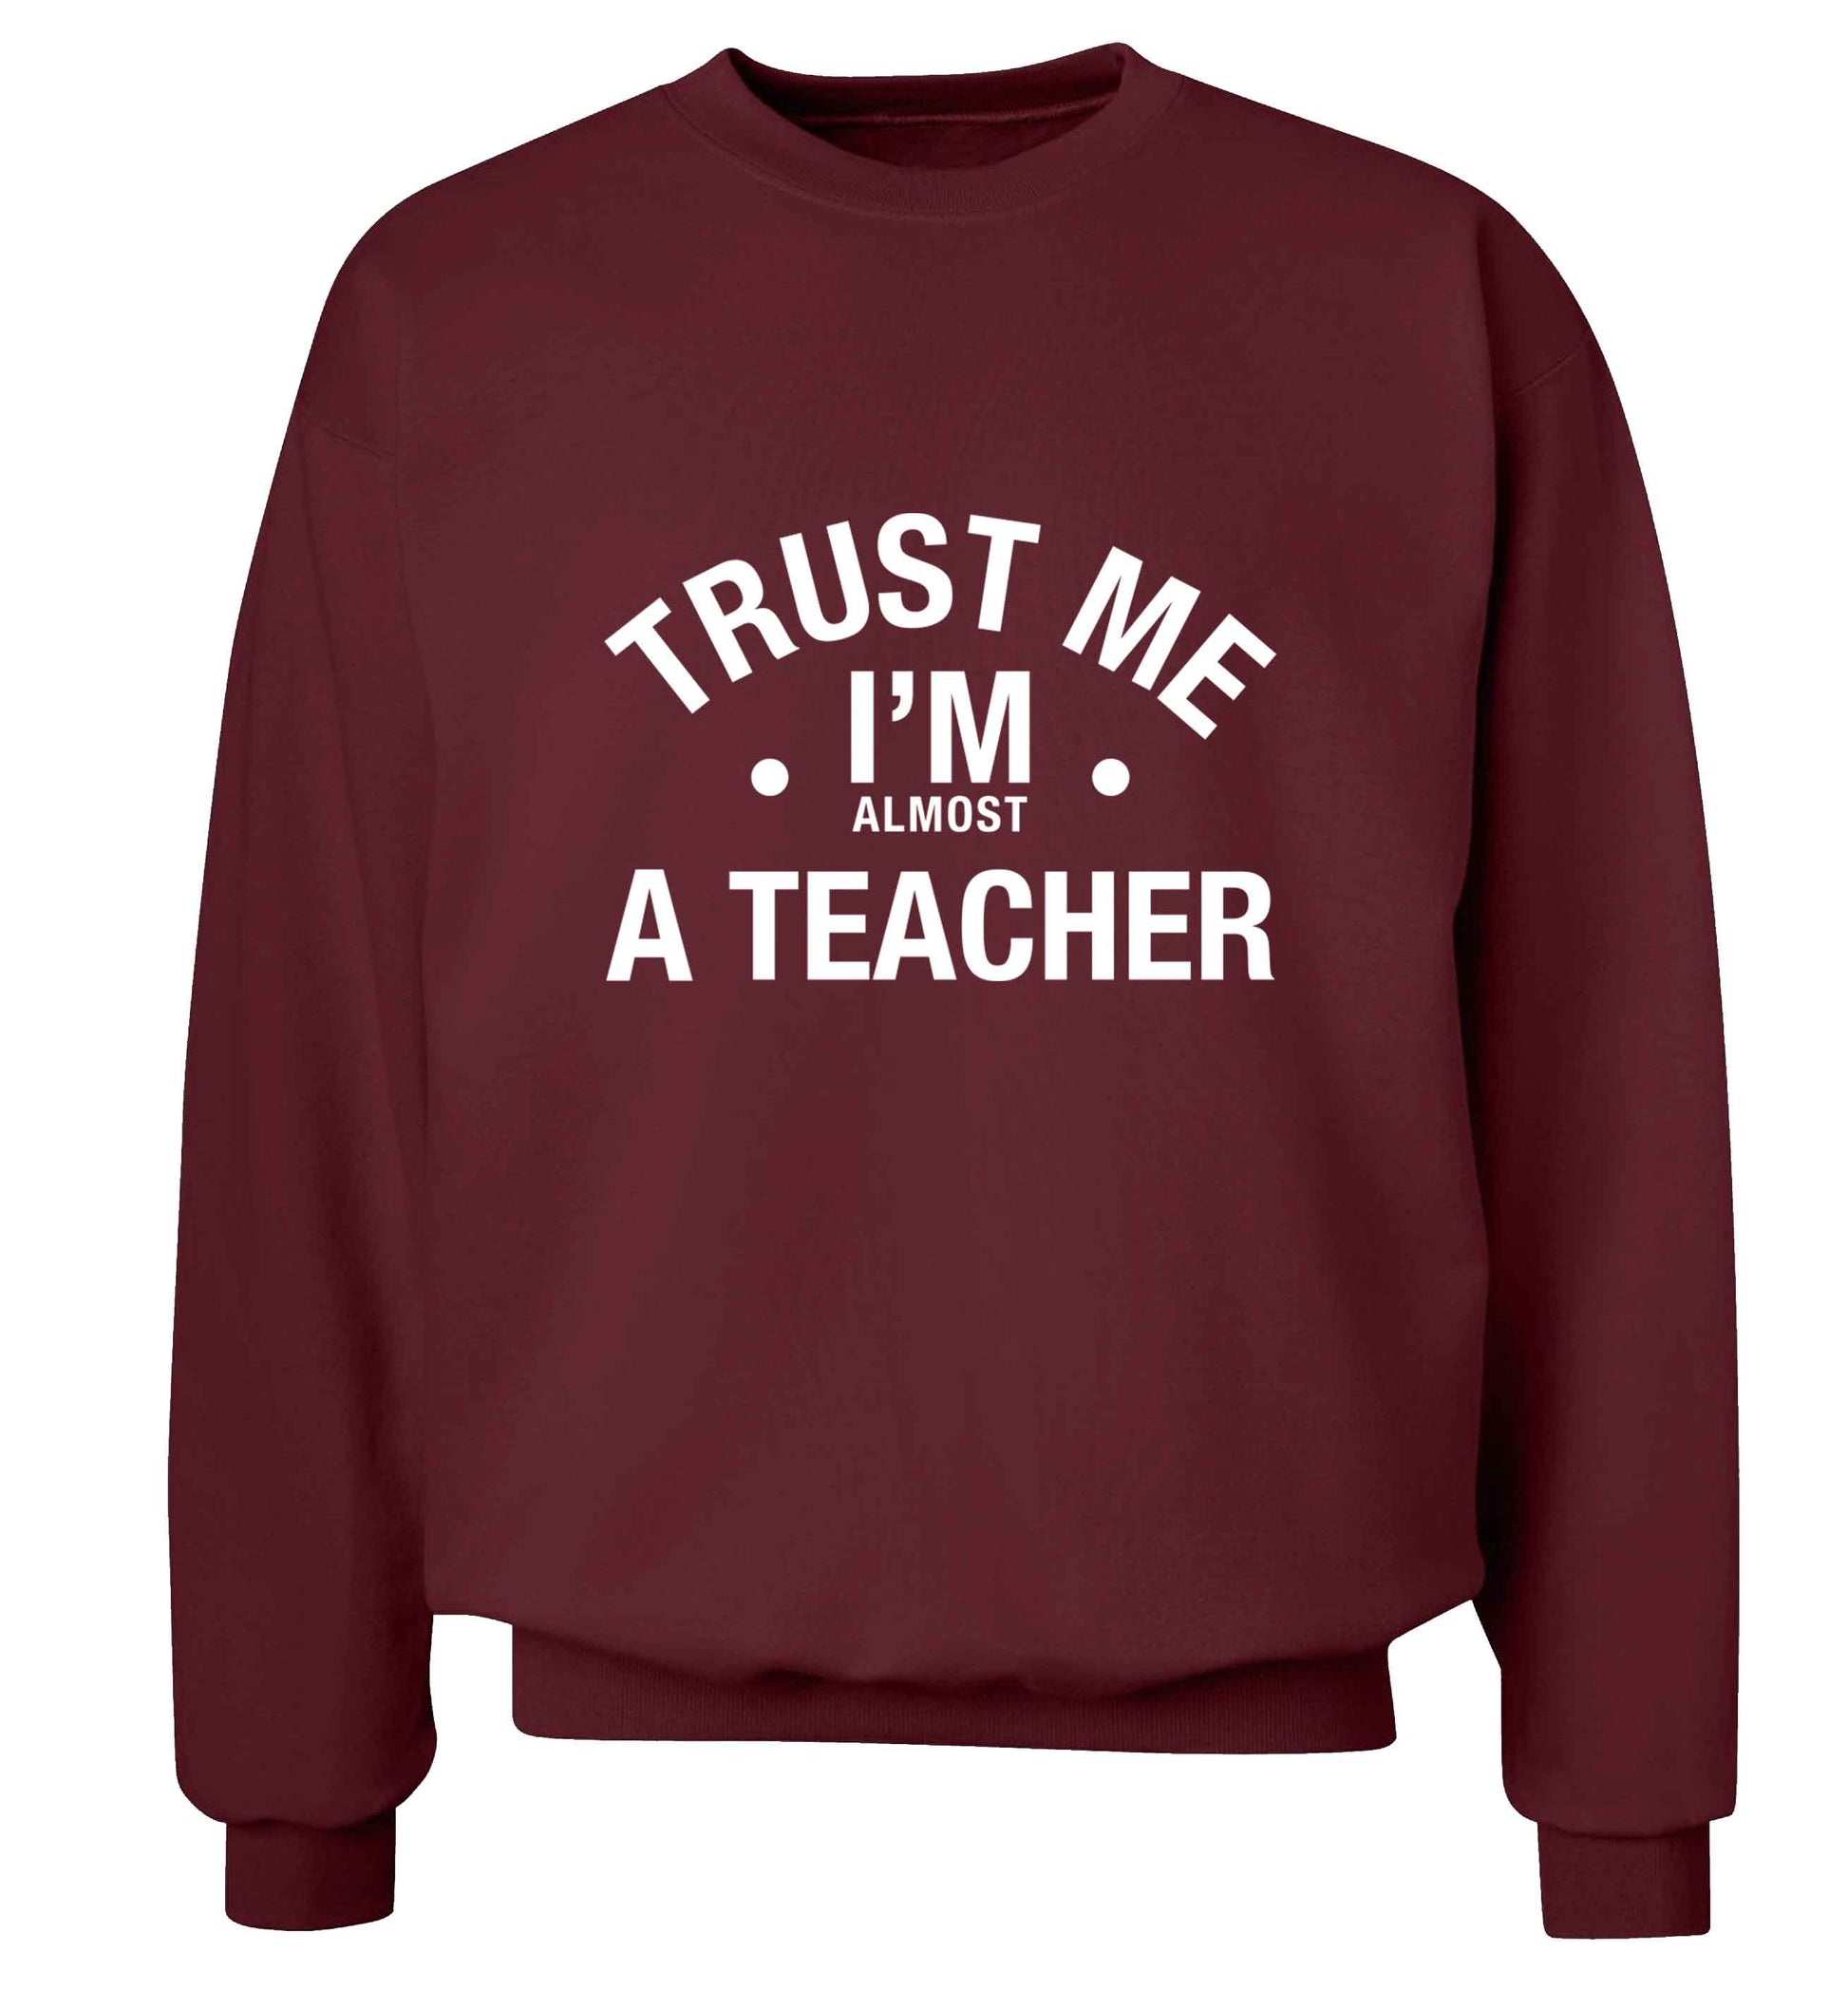 Trust me I'm almost a teacher adult's unisex maroon sweater 2XL